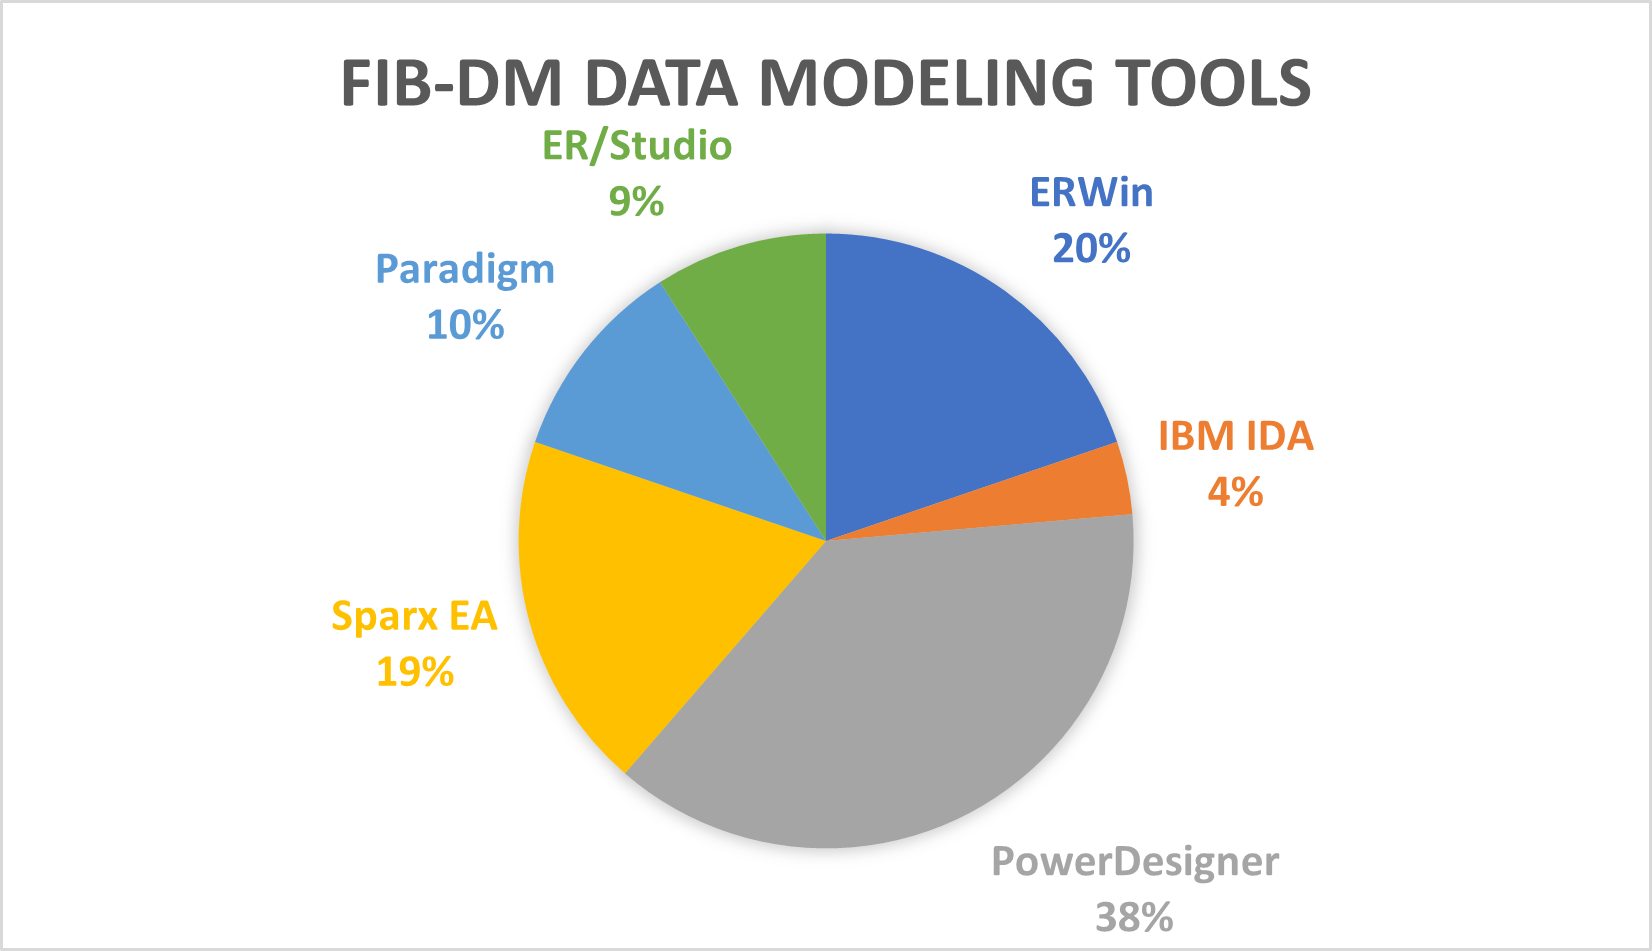 FIB-DM Data Modelling Tools (pie chart)